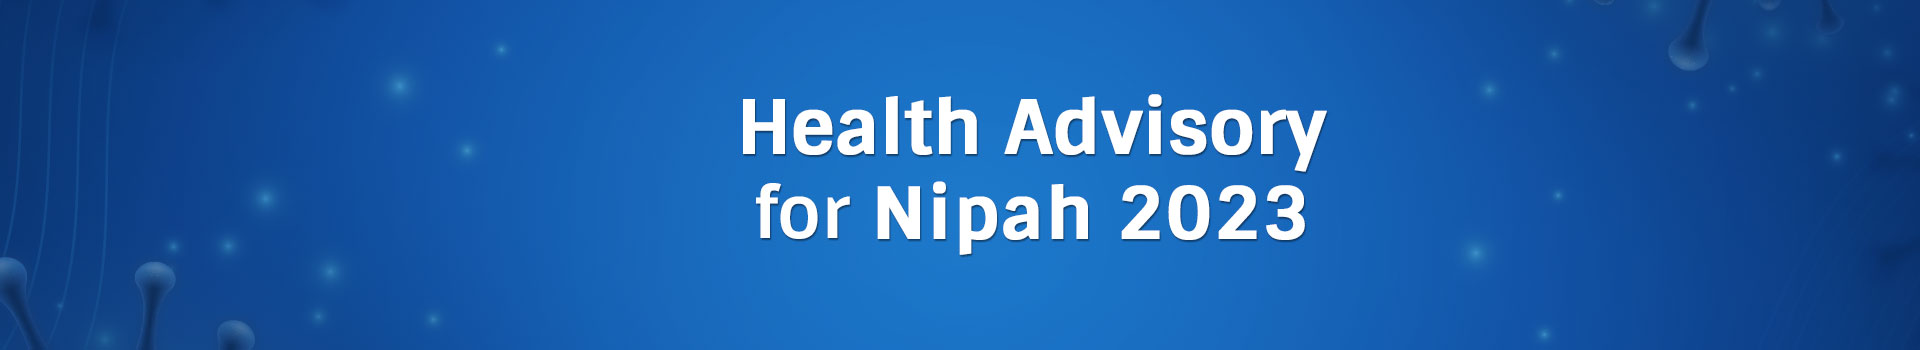 Health Advisory for Nipah 2023